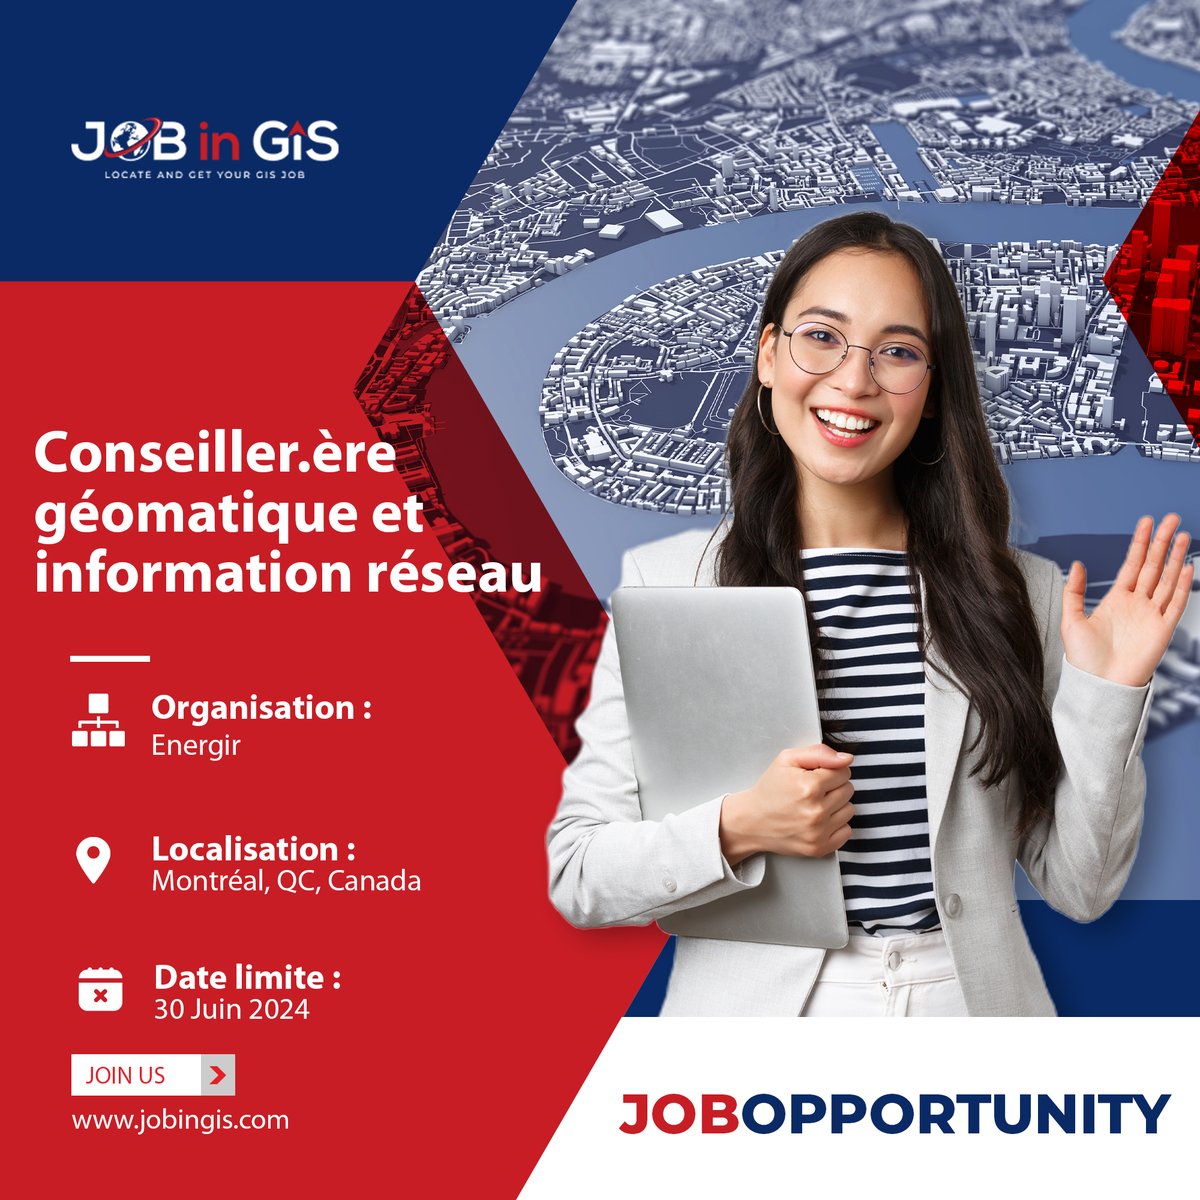 #jobingis : Energir recrute un(e) Conseiller.ère géomatique et information réseau
📍 : #Montreal , QC, #Canada

Apply here 👉 : jobingis.com/jobs/conseille…

#Jobs #mapping #GIS #geospatial #remotesensing #gisjobs #Geography #cartography